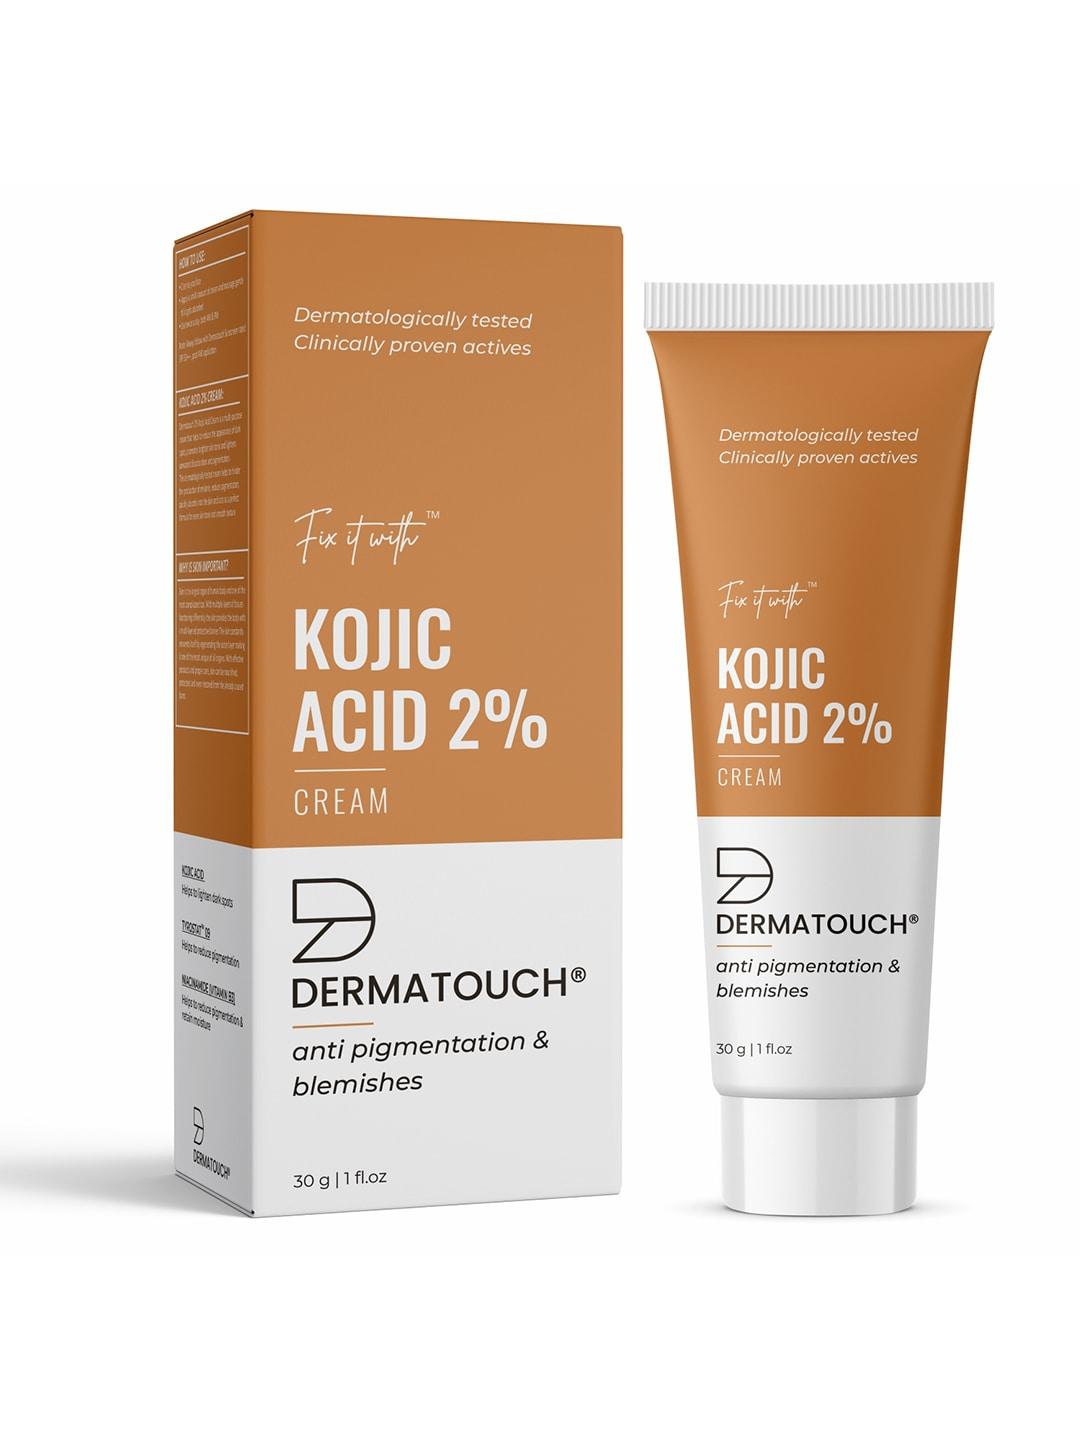 Dermatouch 2% Kojic Acid Anti-Pigmentation & Blemishes Cream-30 gm